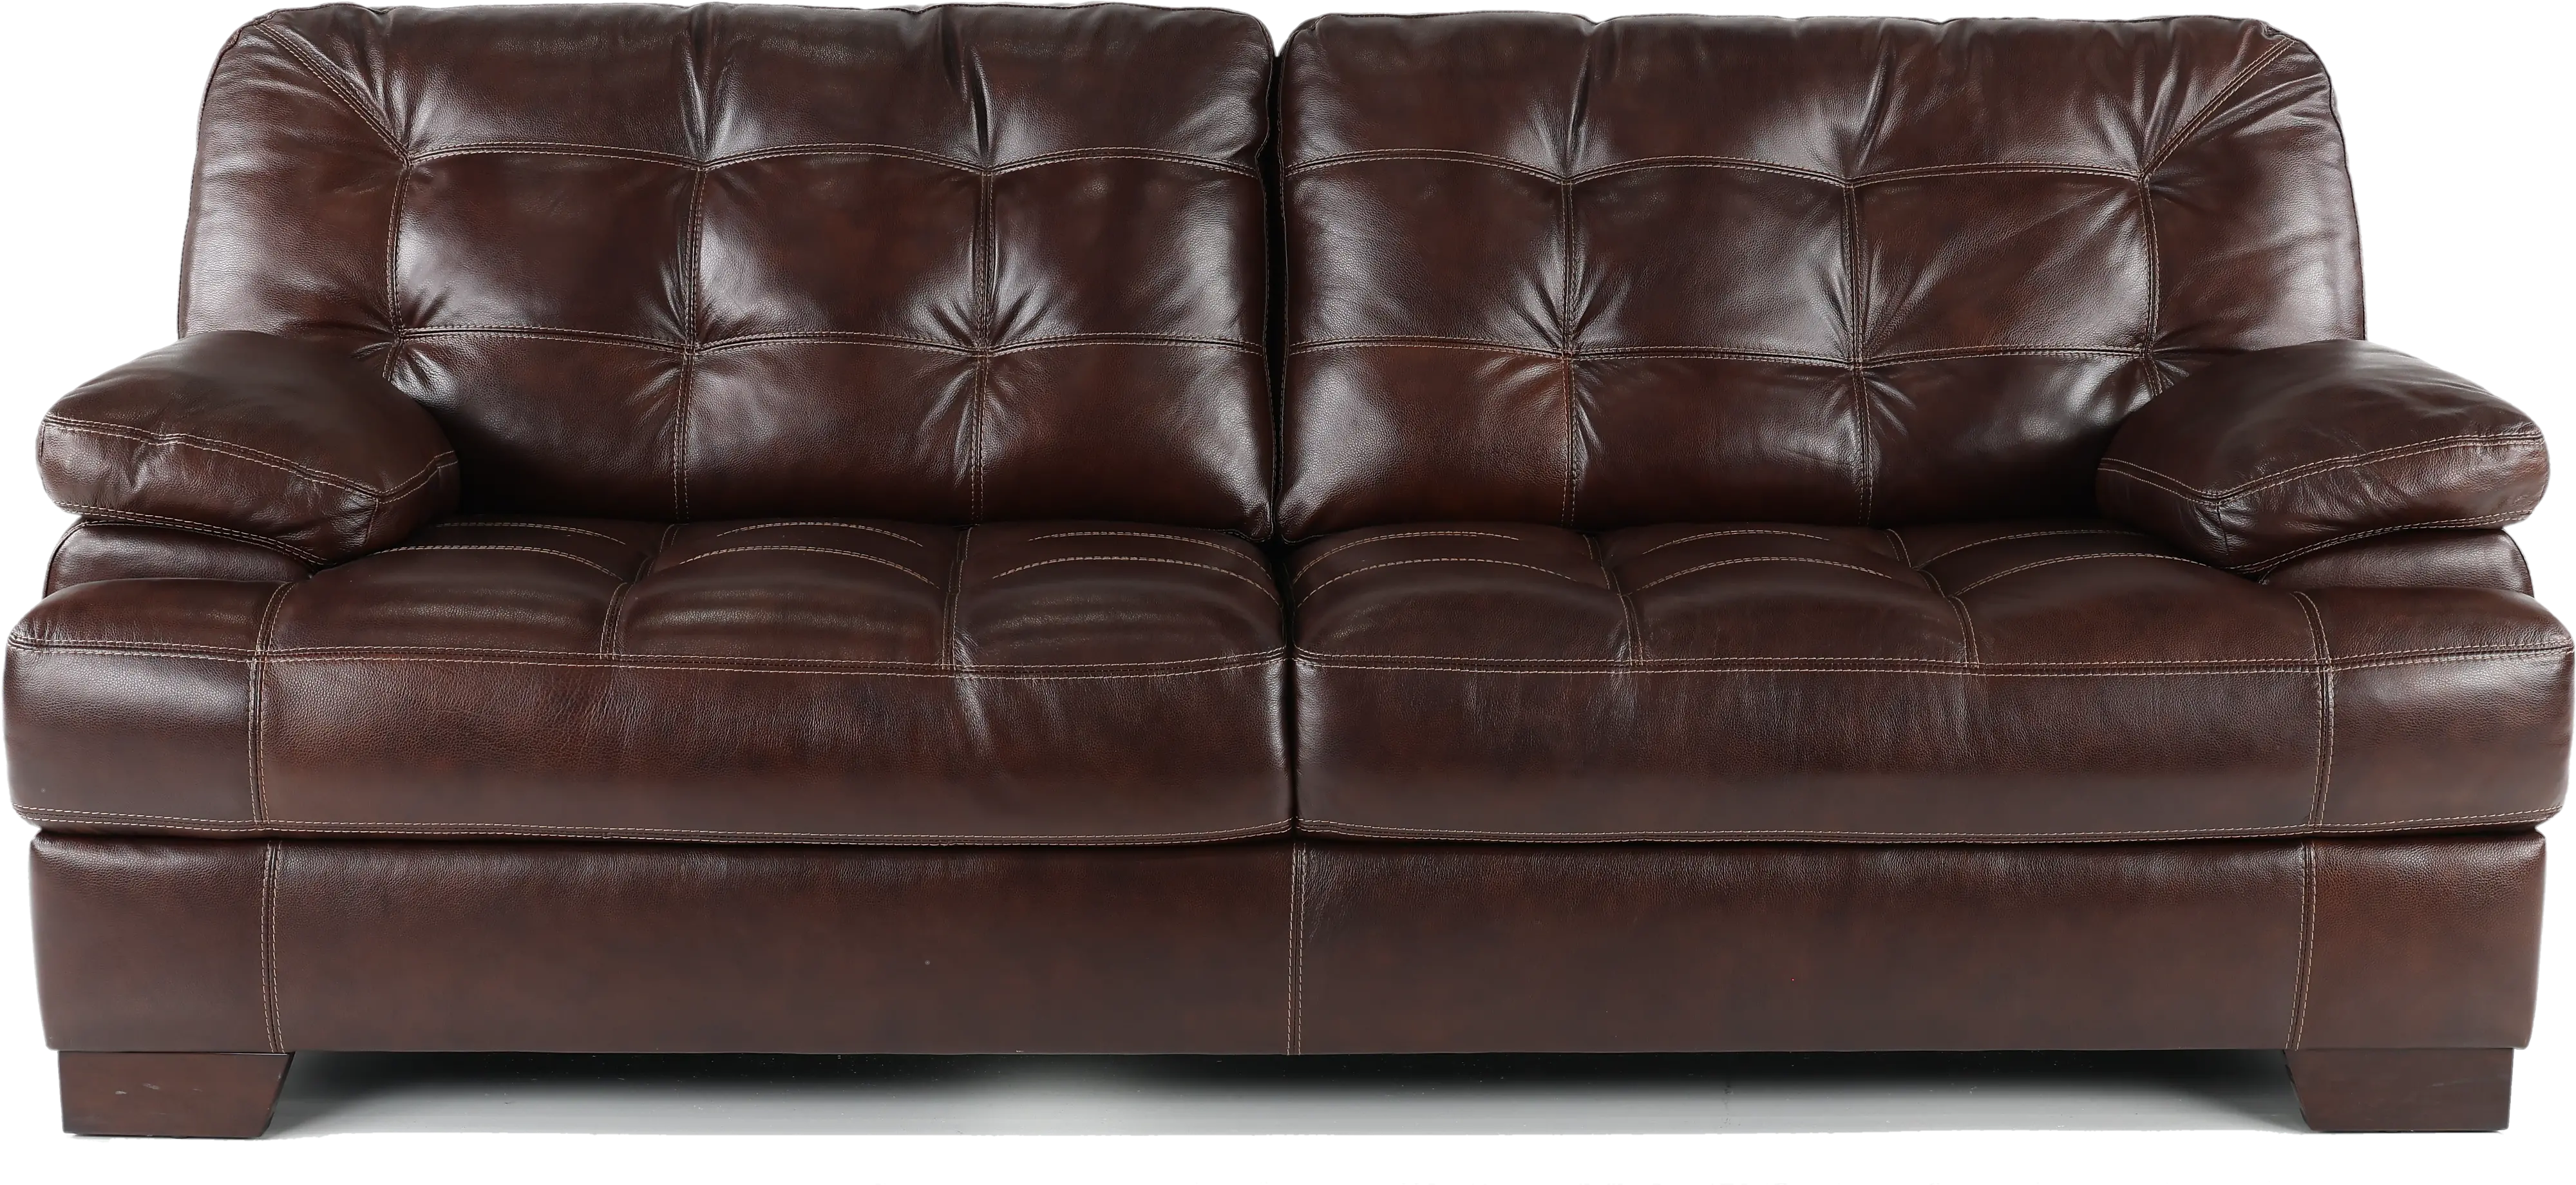 Leather Amarillo Brown Sofa | Walnut RC Willey